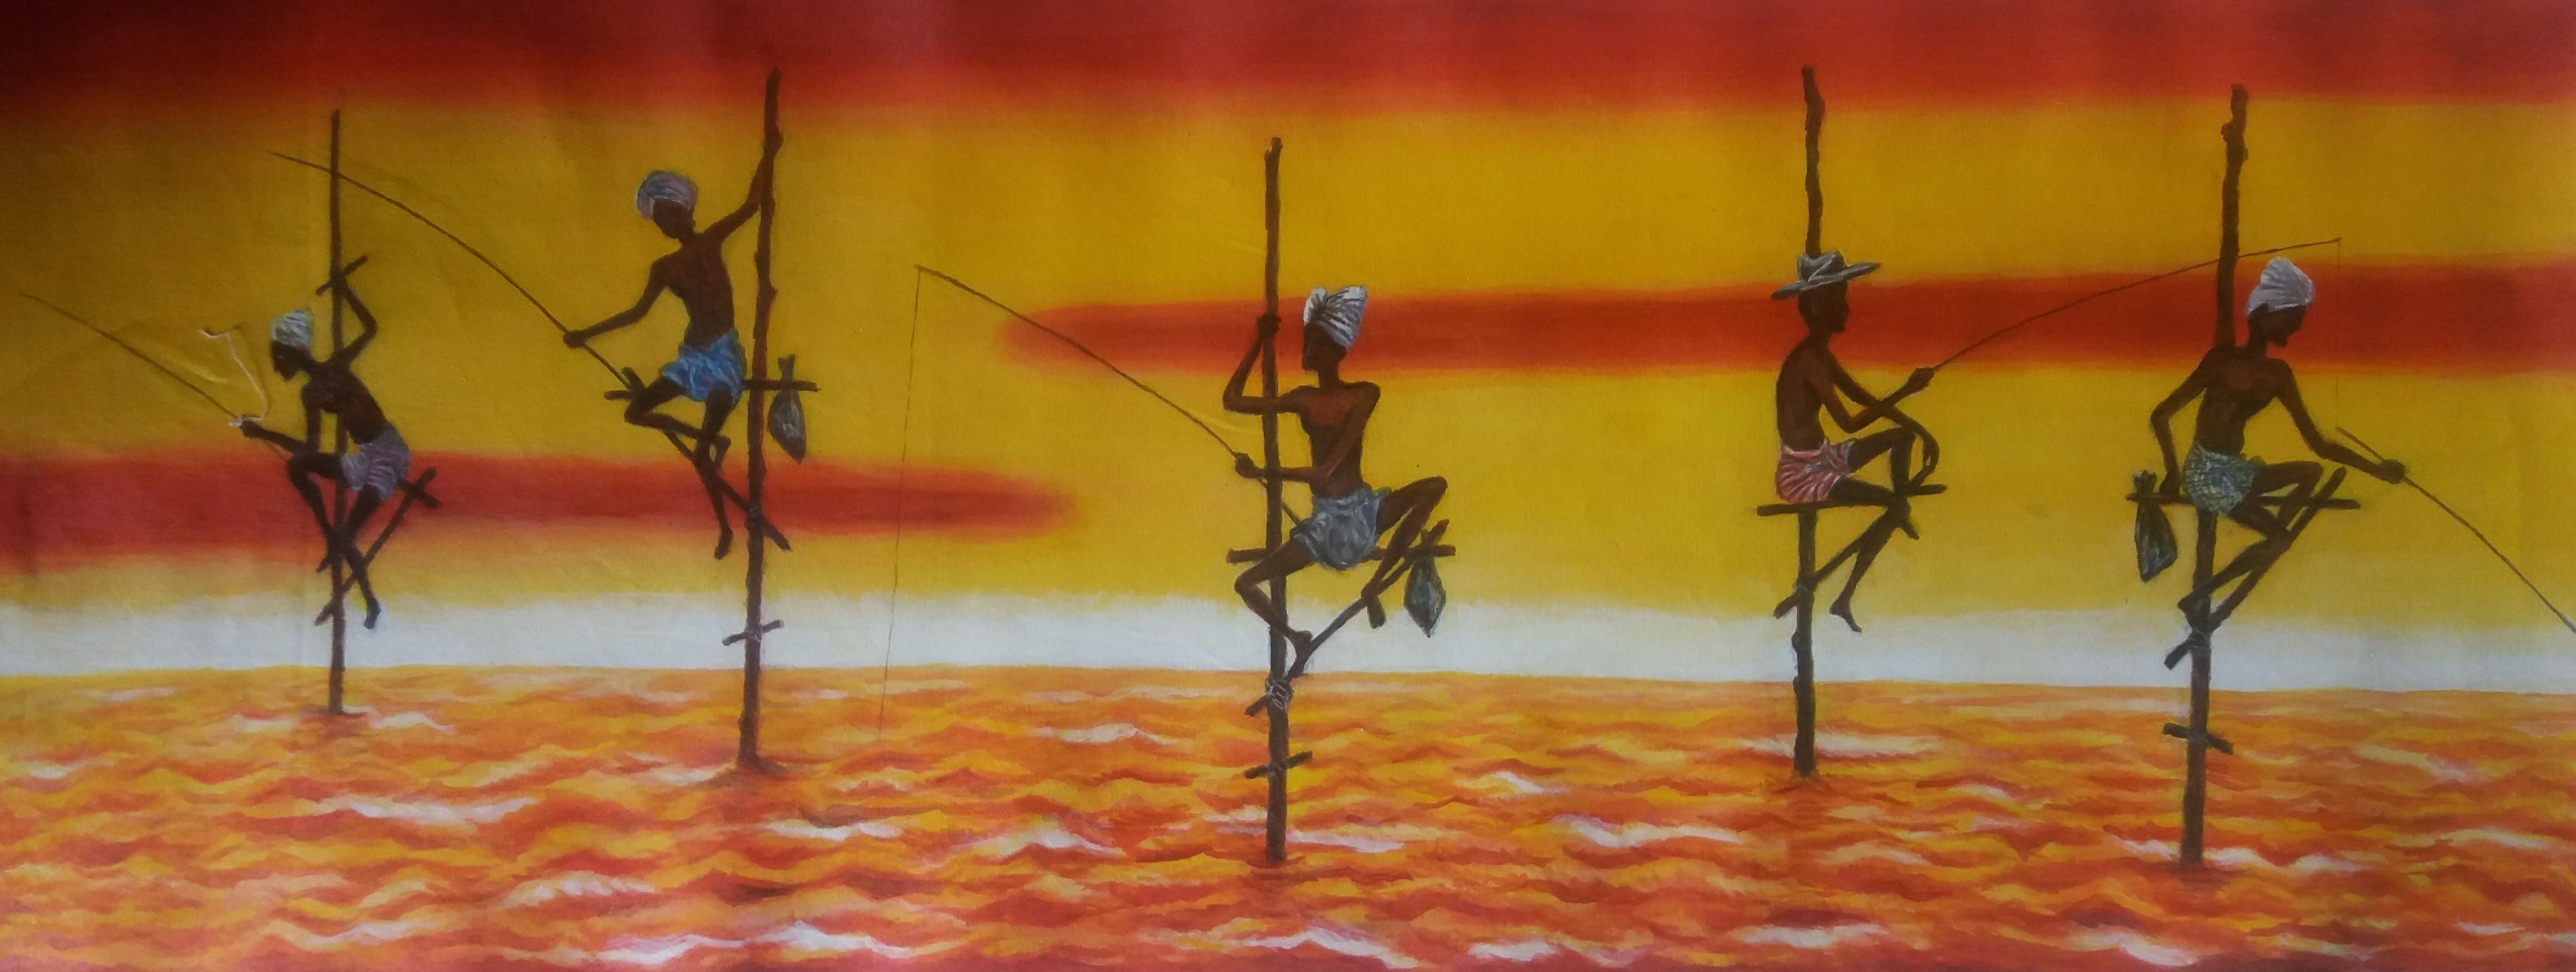 Red fisherman by Nandasena Dalugama